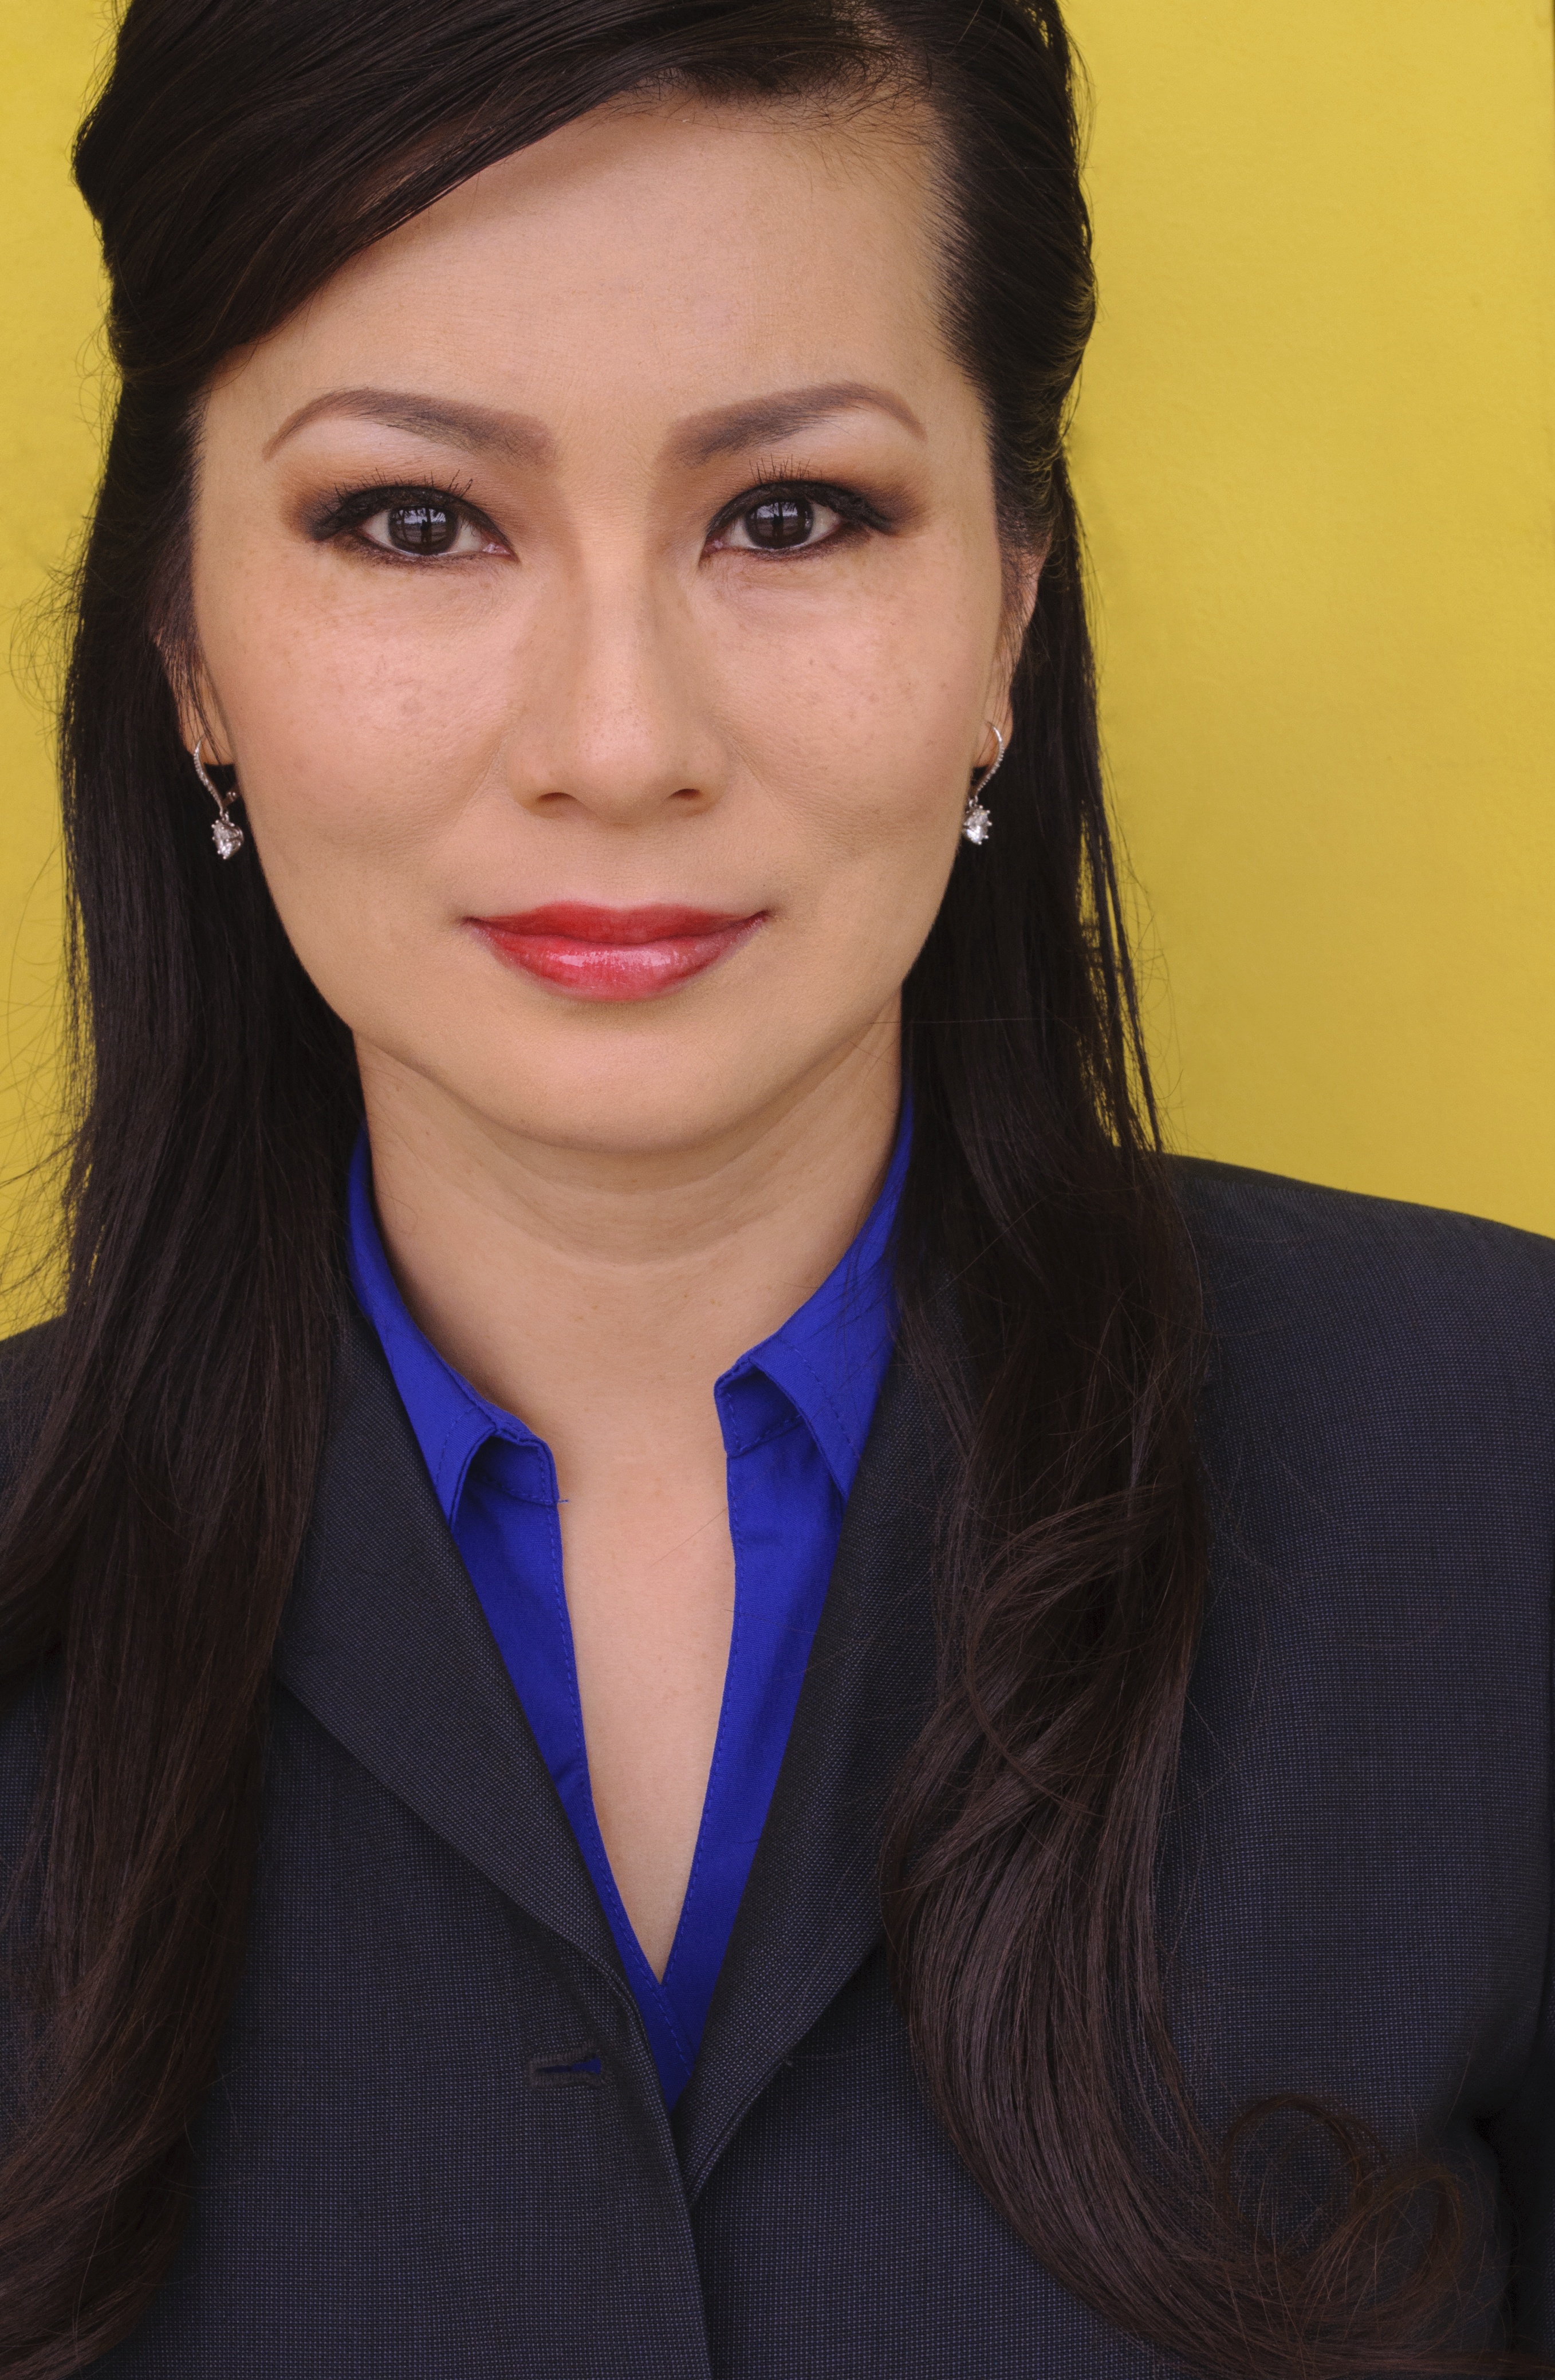 Joan Wong